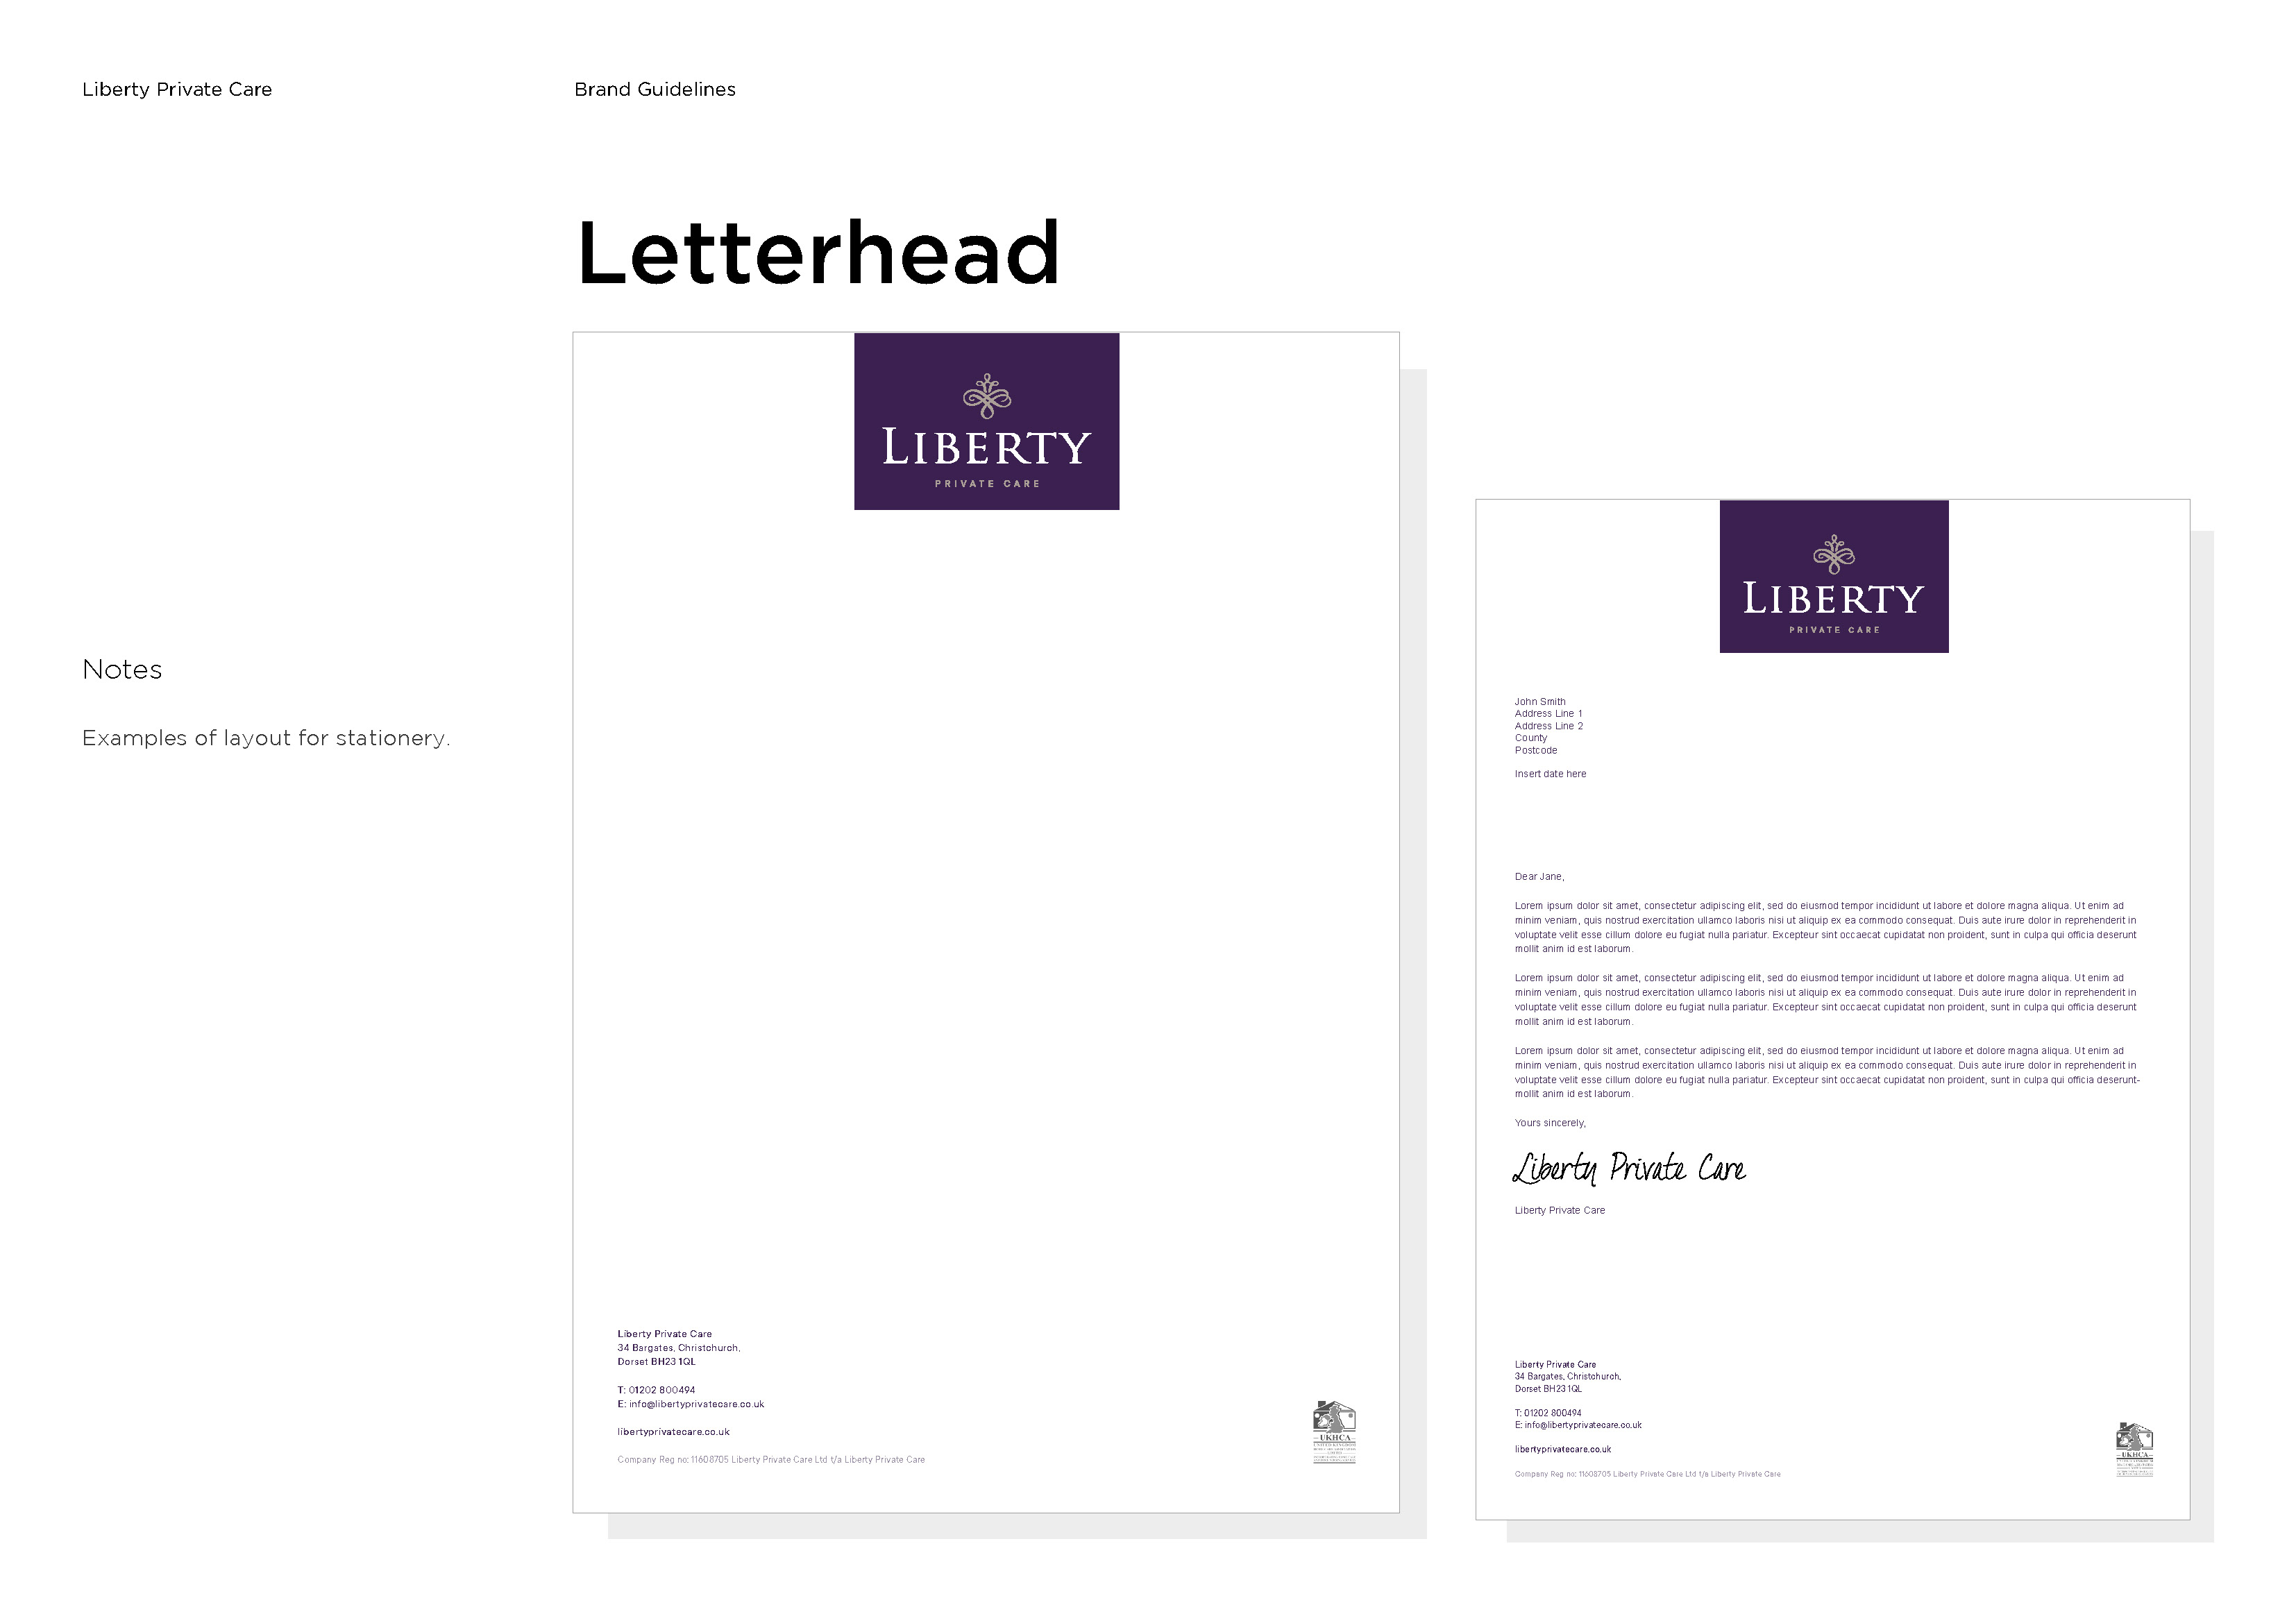 LPC Letterhead Design